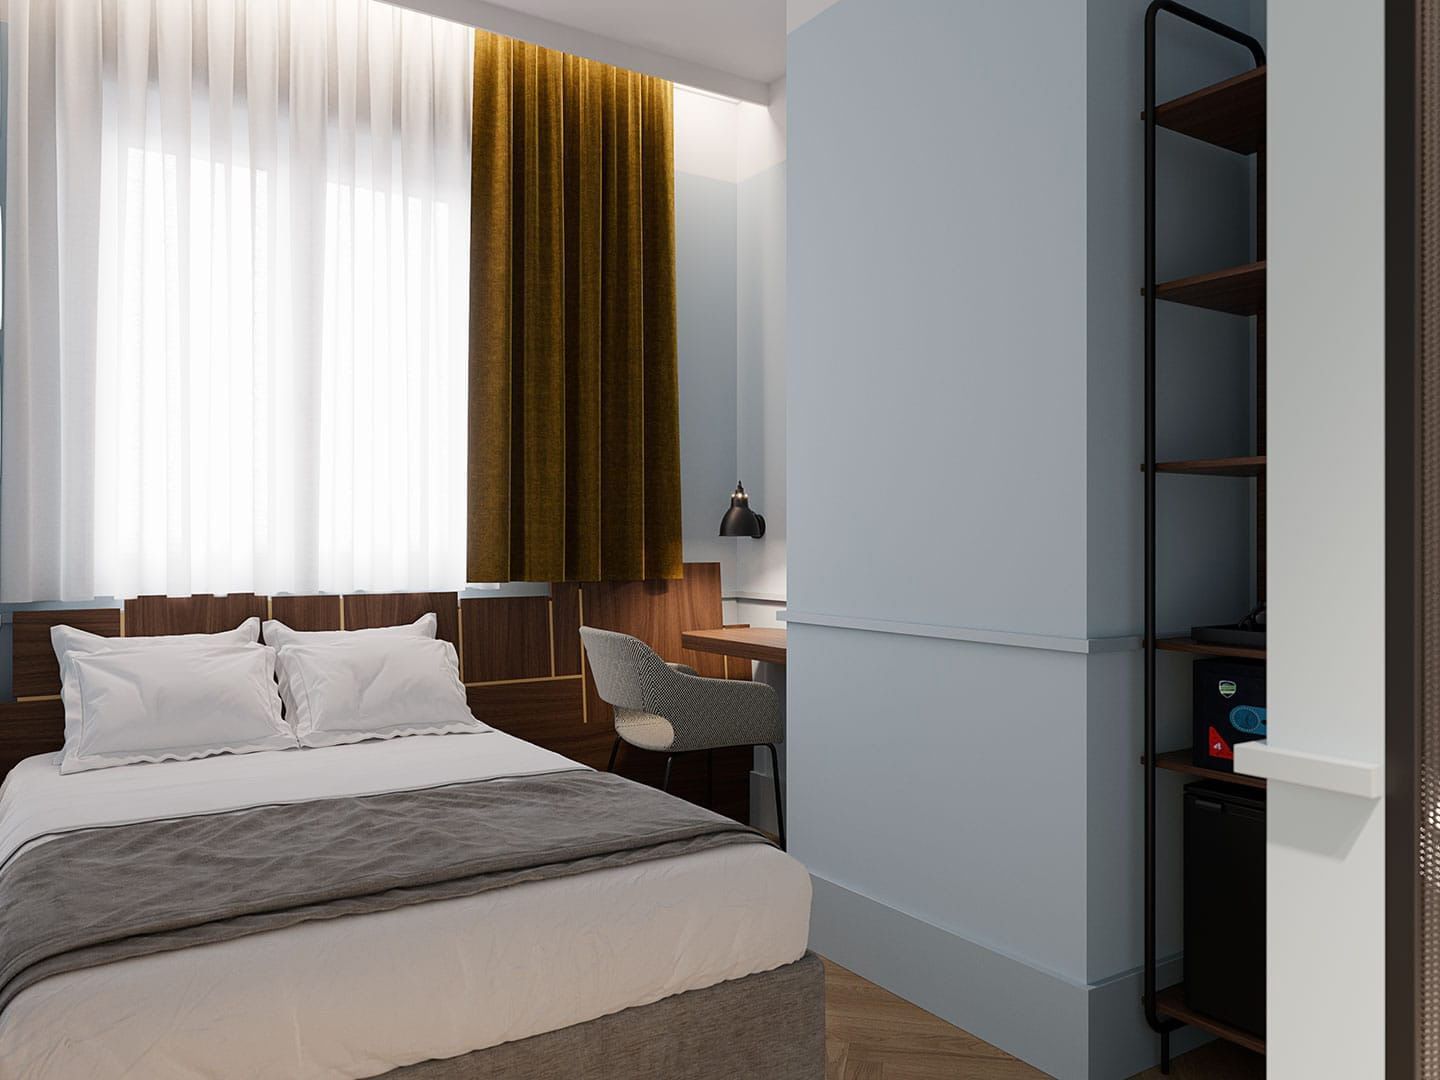 King bed in La Mini Singola room at Urban Hive Hotel Milan